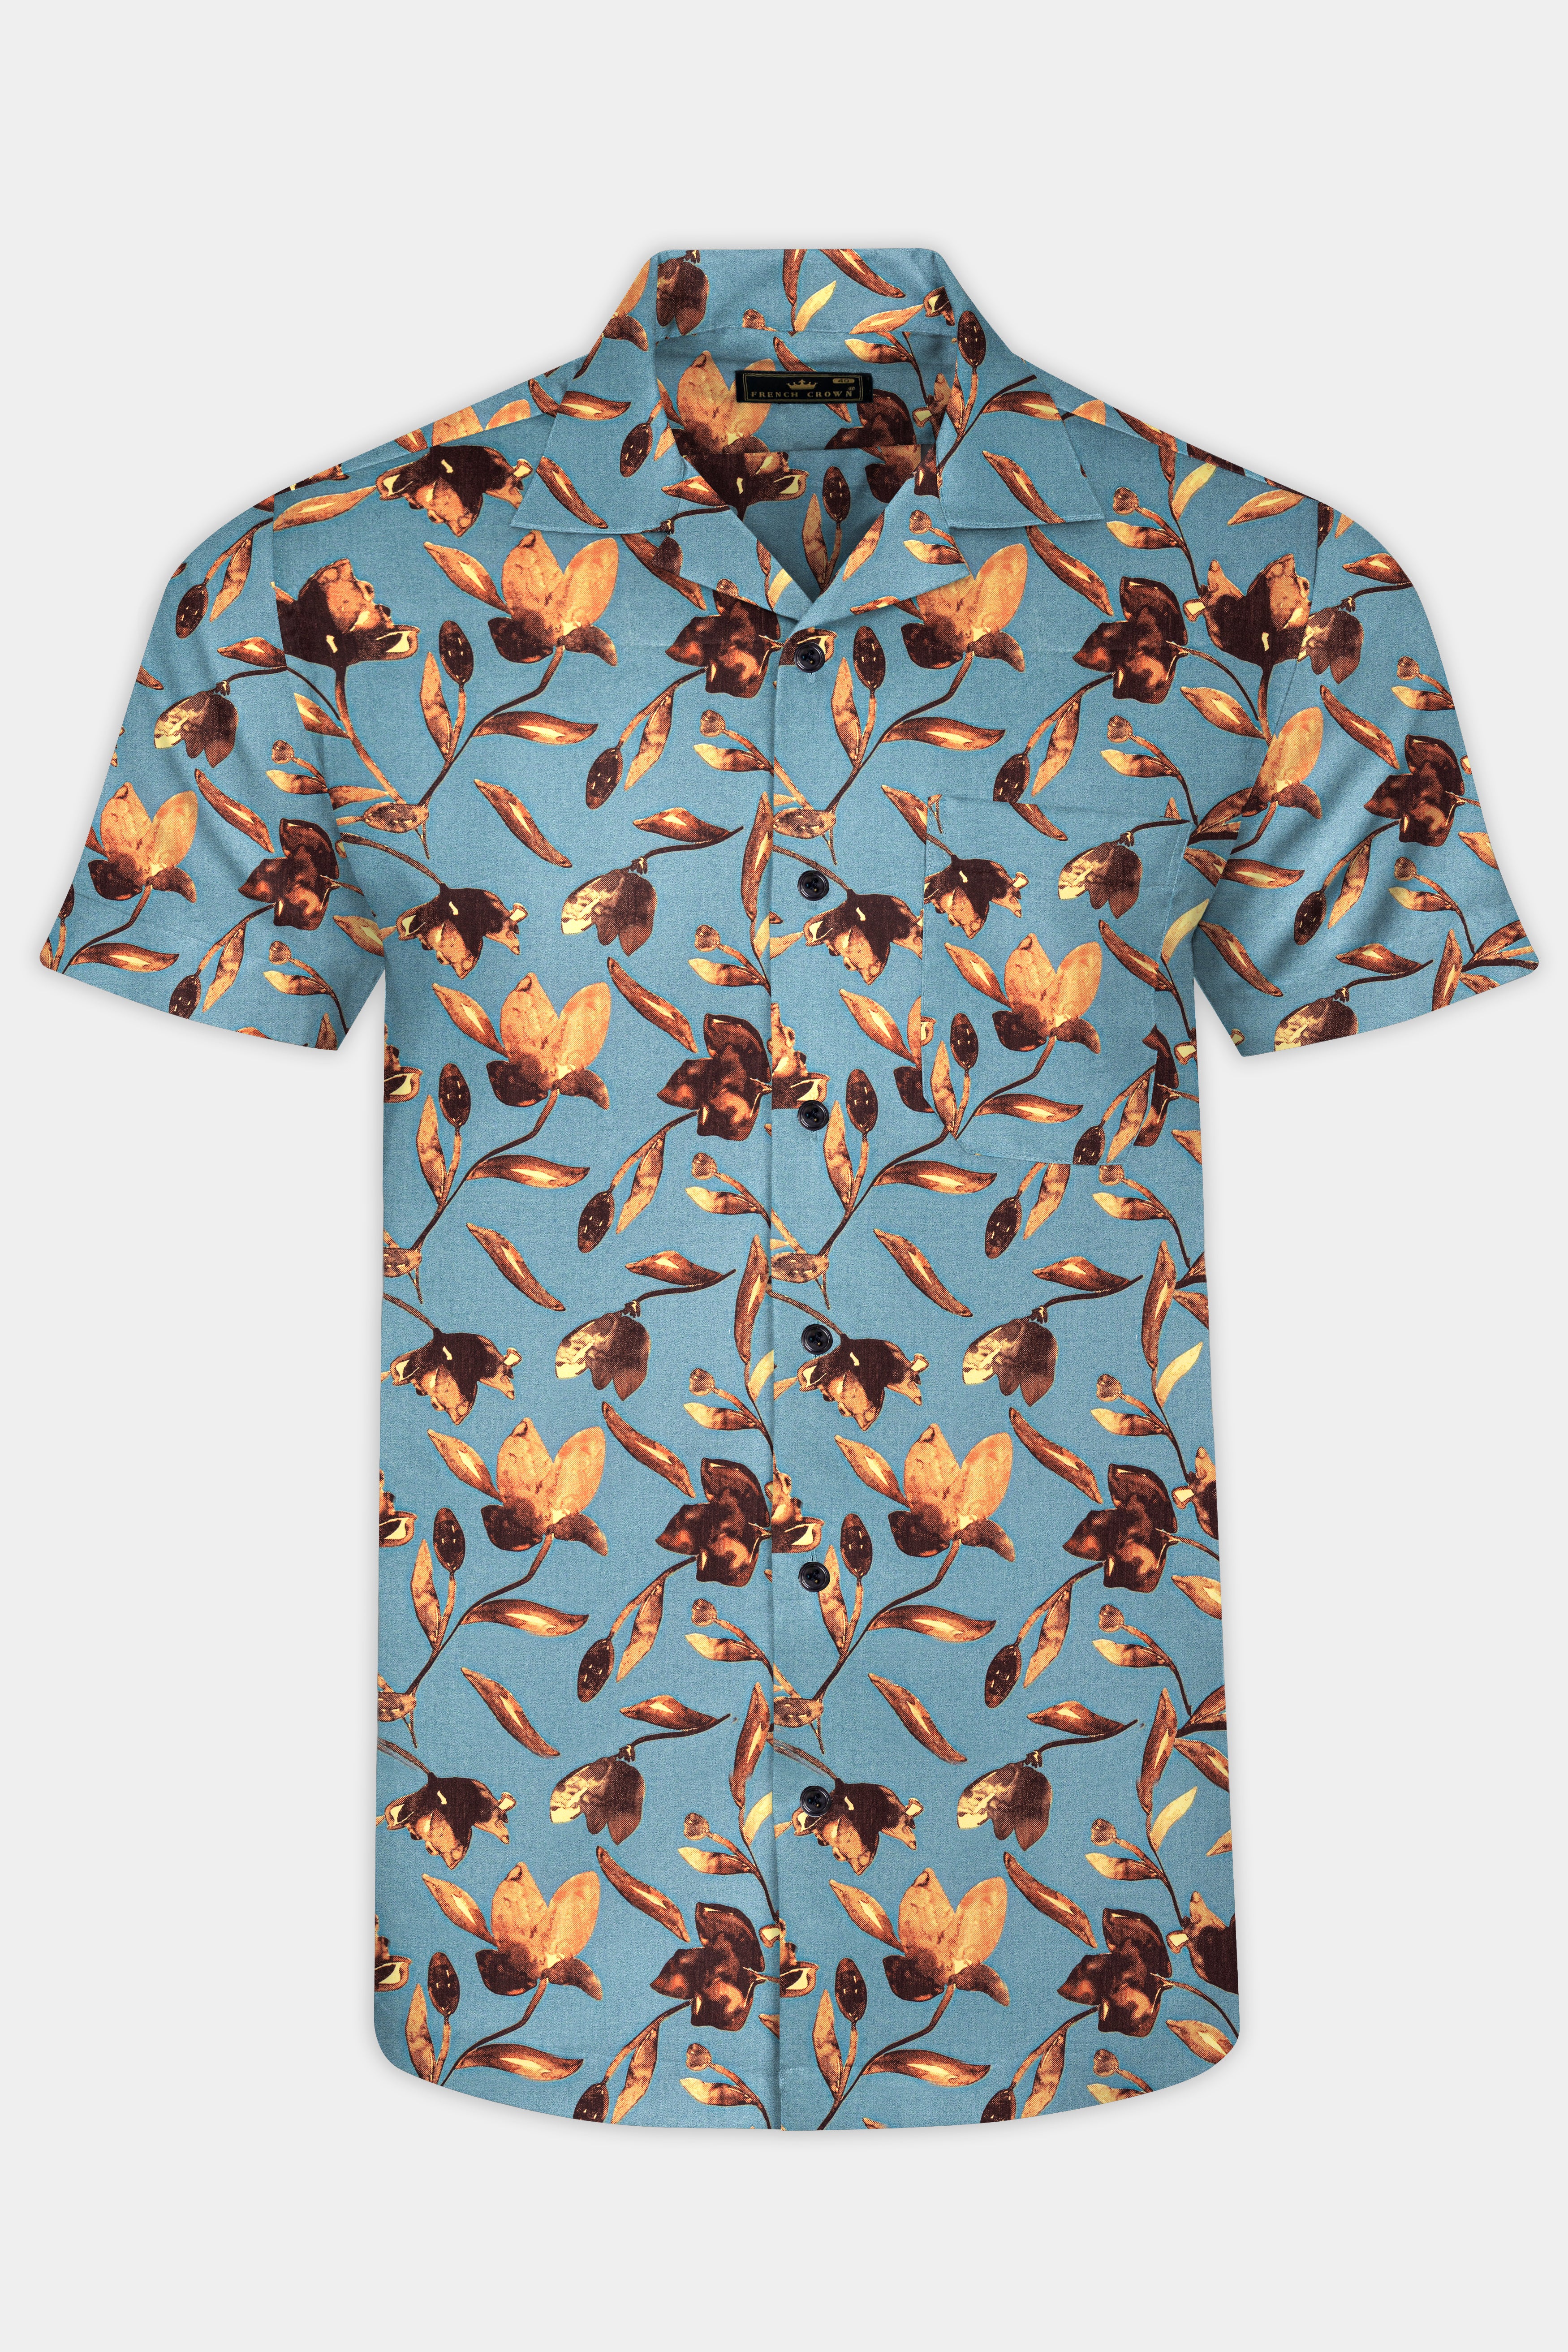 Cascade Blue and Tangerine Orange Floral Printed Subtle Sheen Super Soft Premium Cotton Shirt